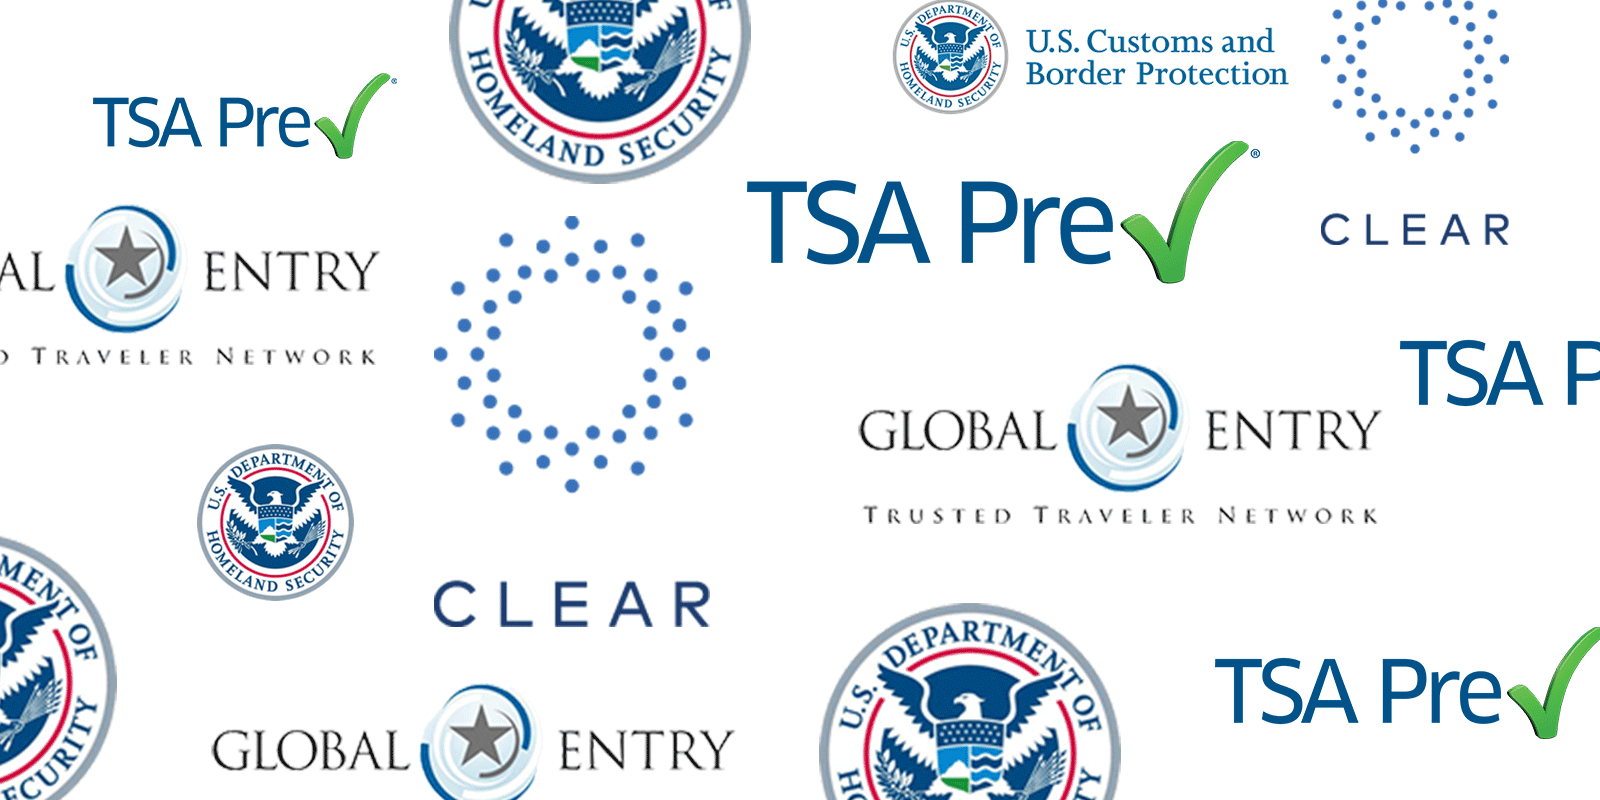 Clear PreCheck Logo - The Definitive Guide To Choosing Between TSA Precheck, Global Entry